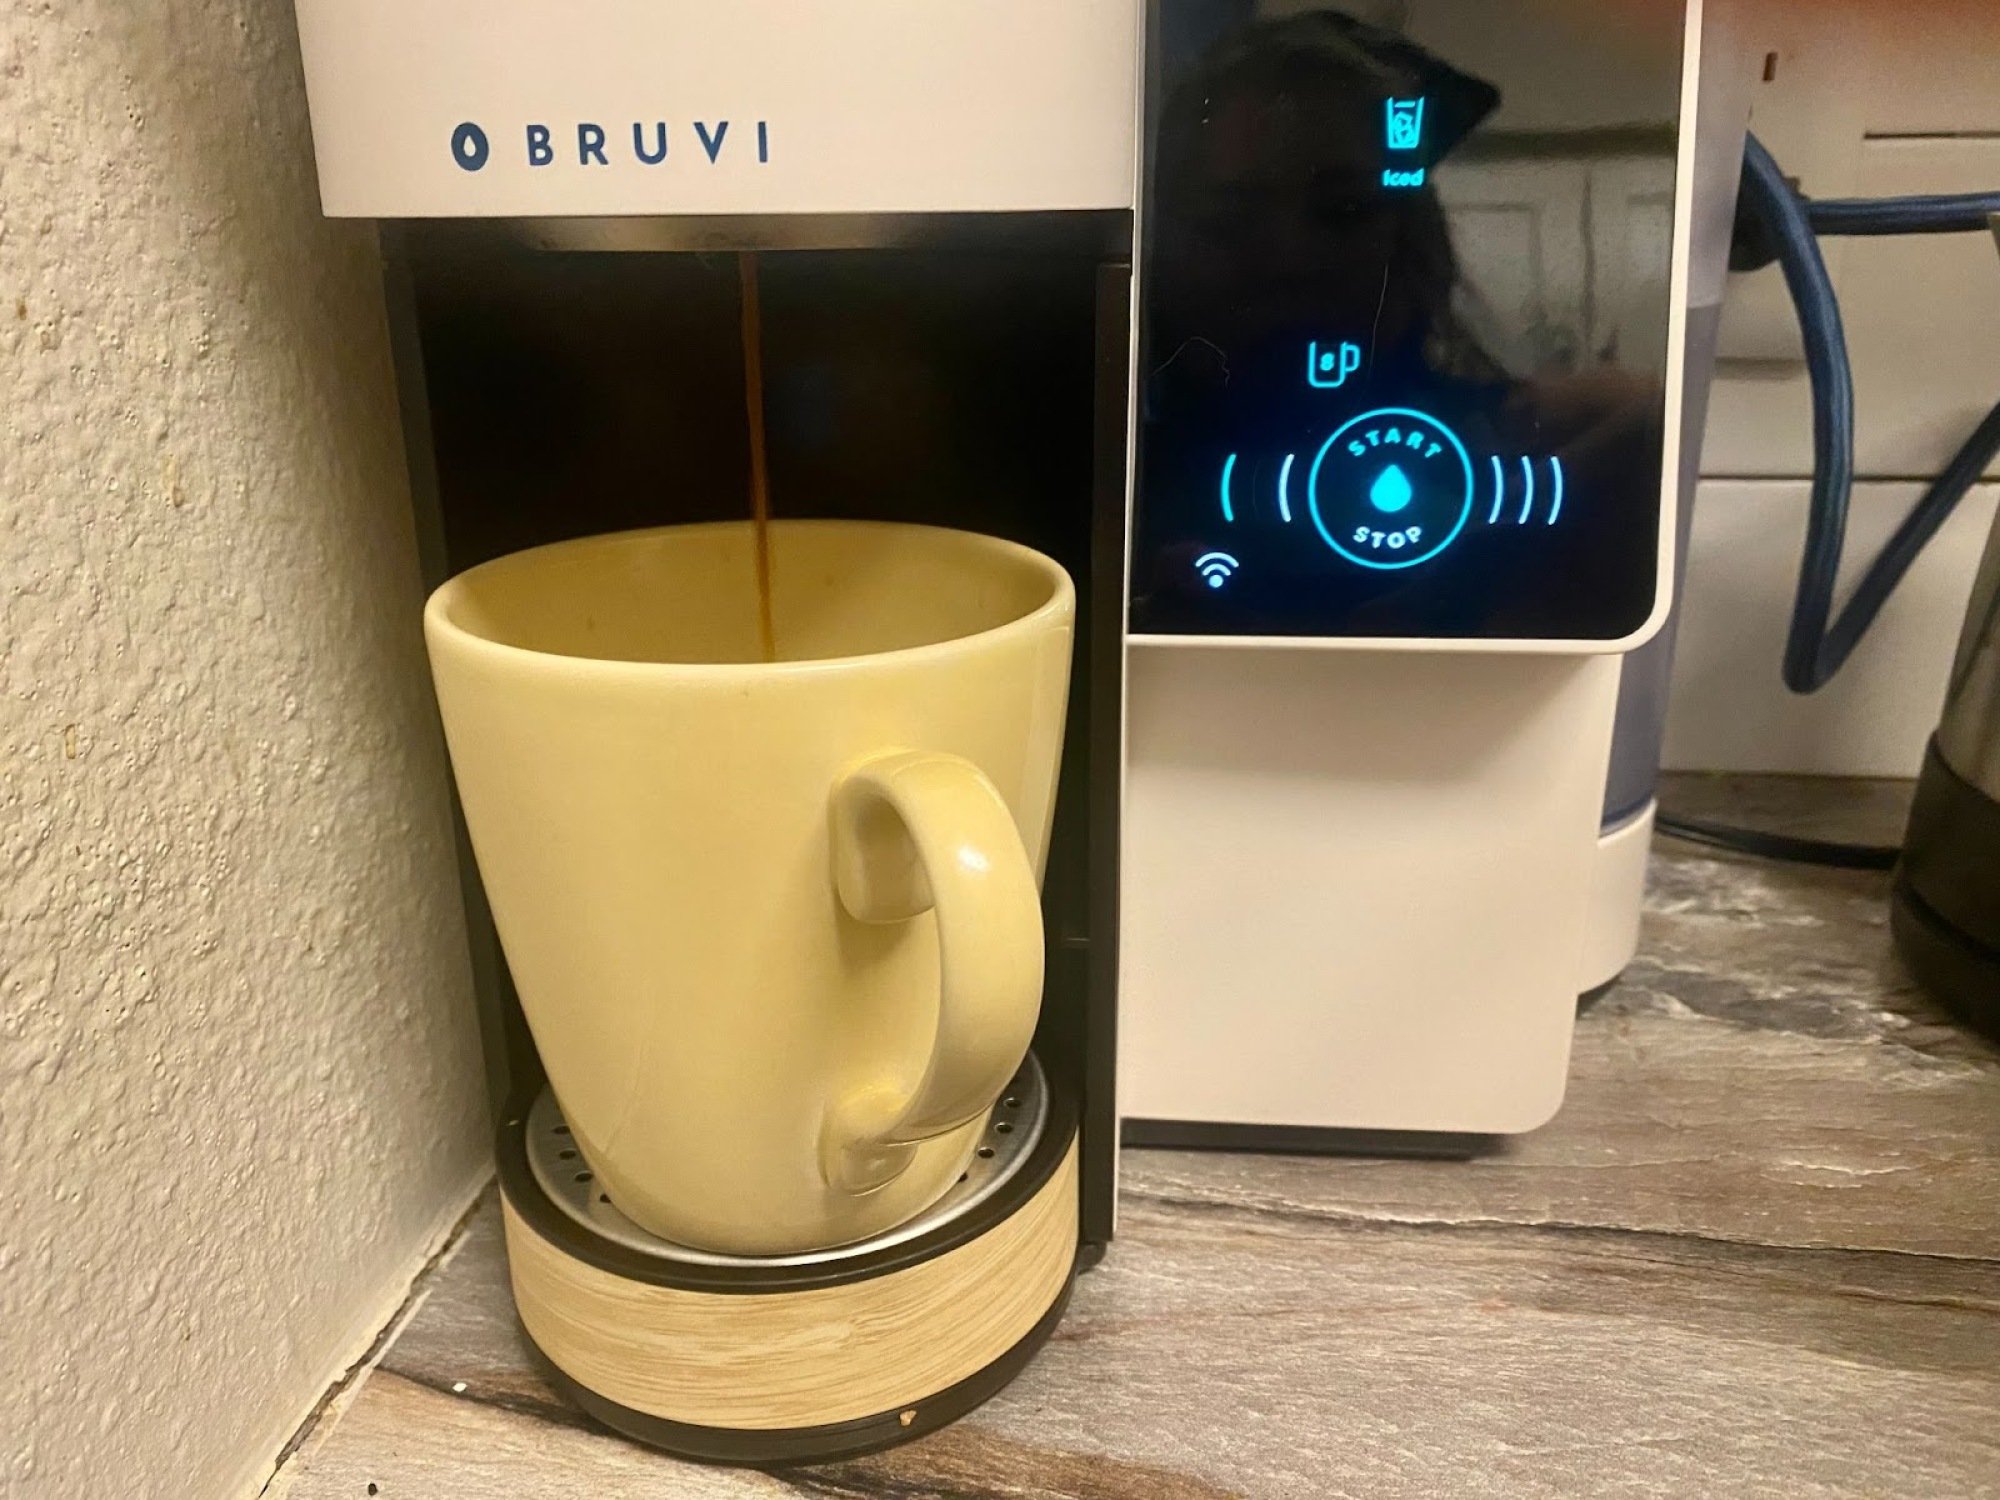 yellow coffee mug filling up with coffee from Bruvi machine